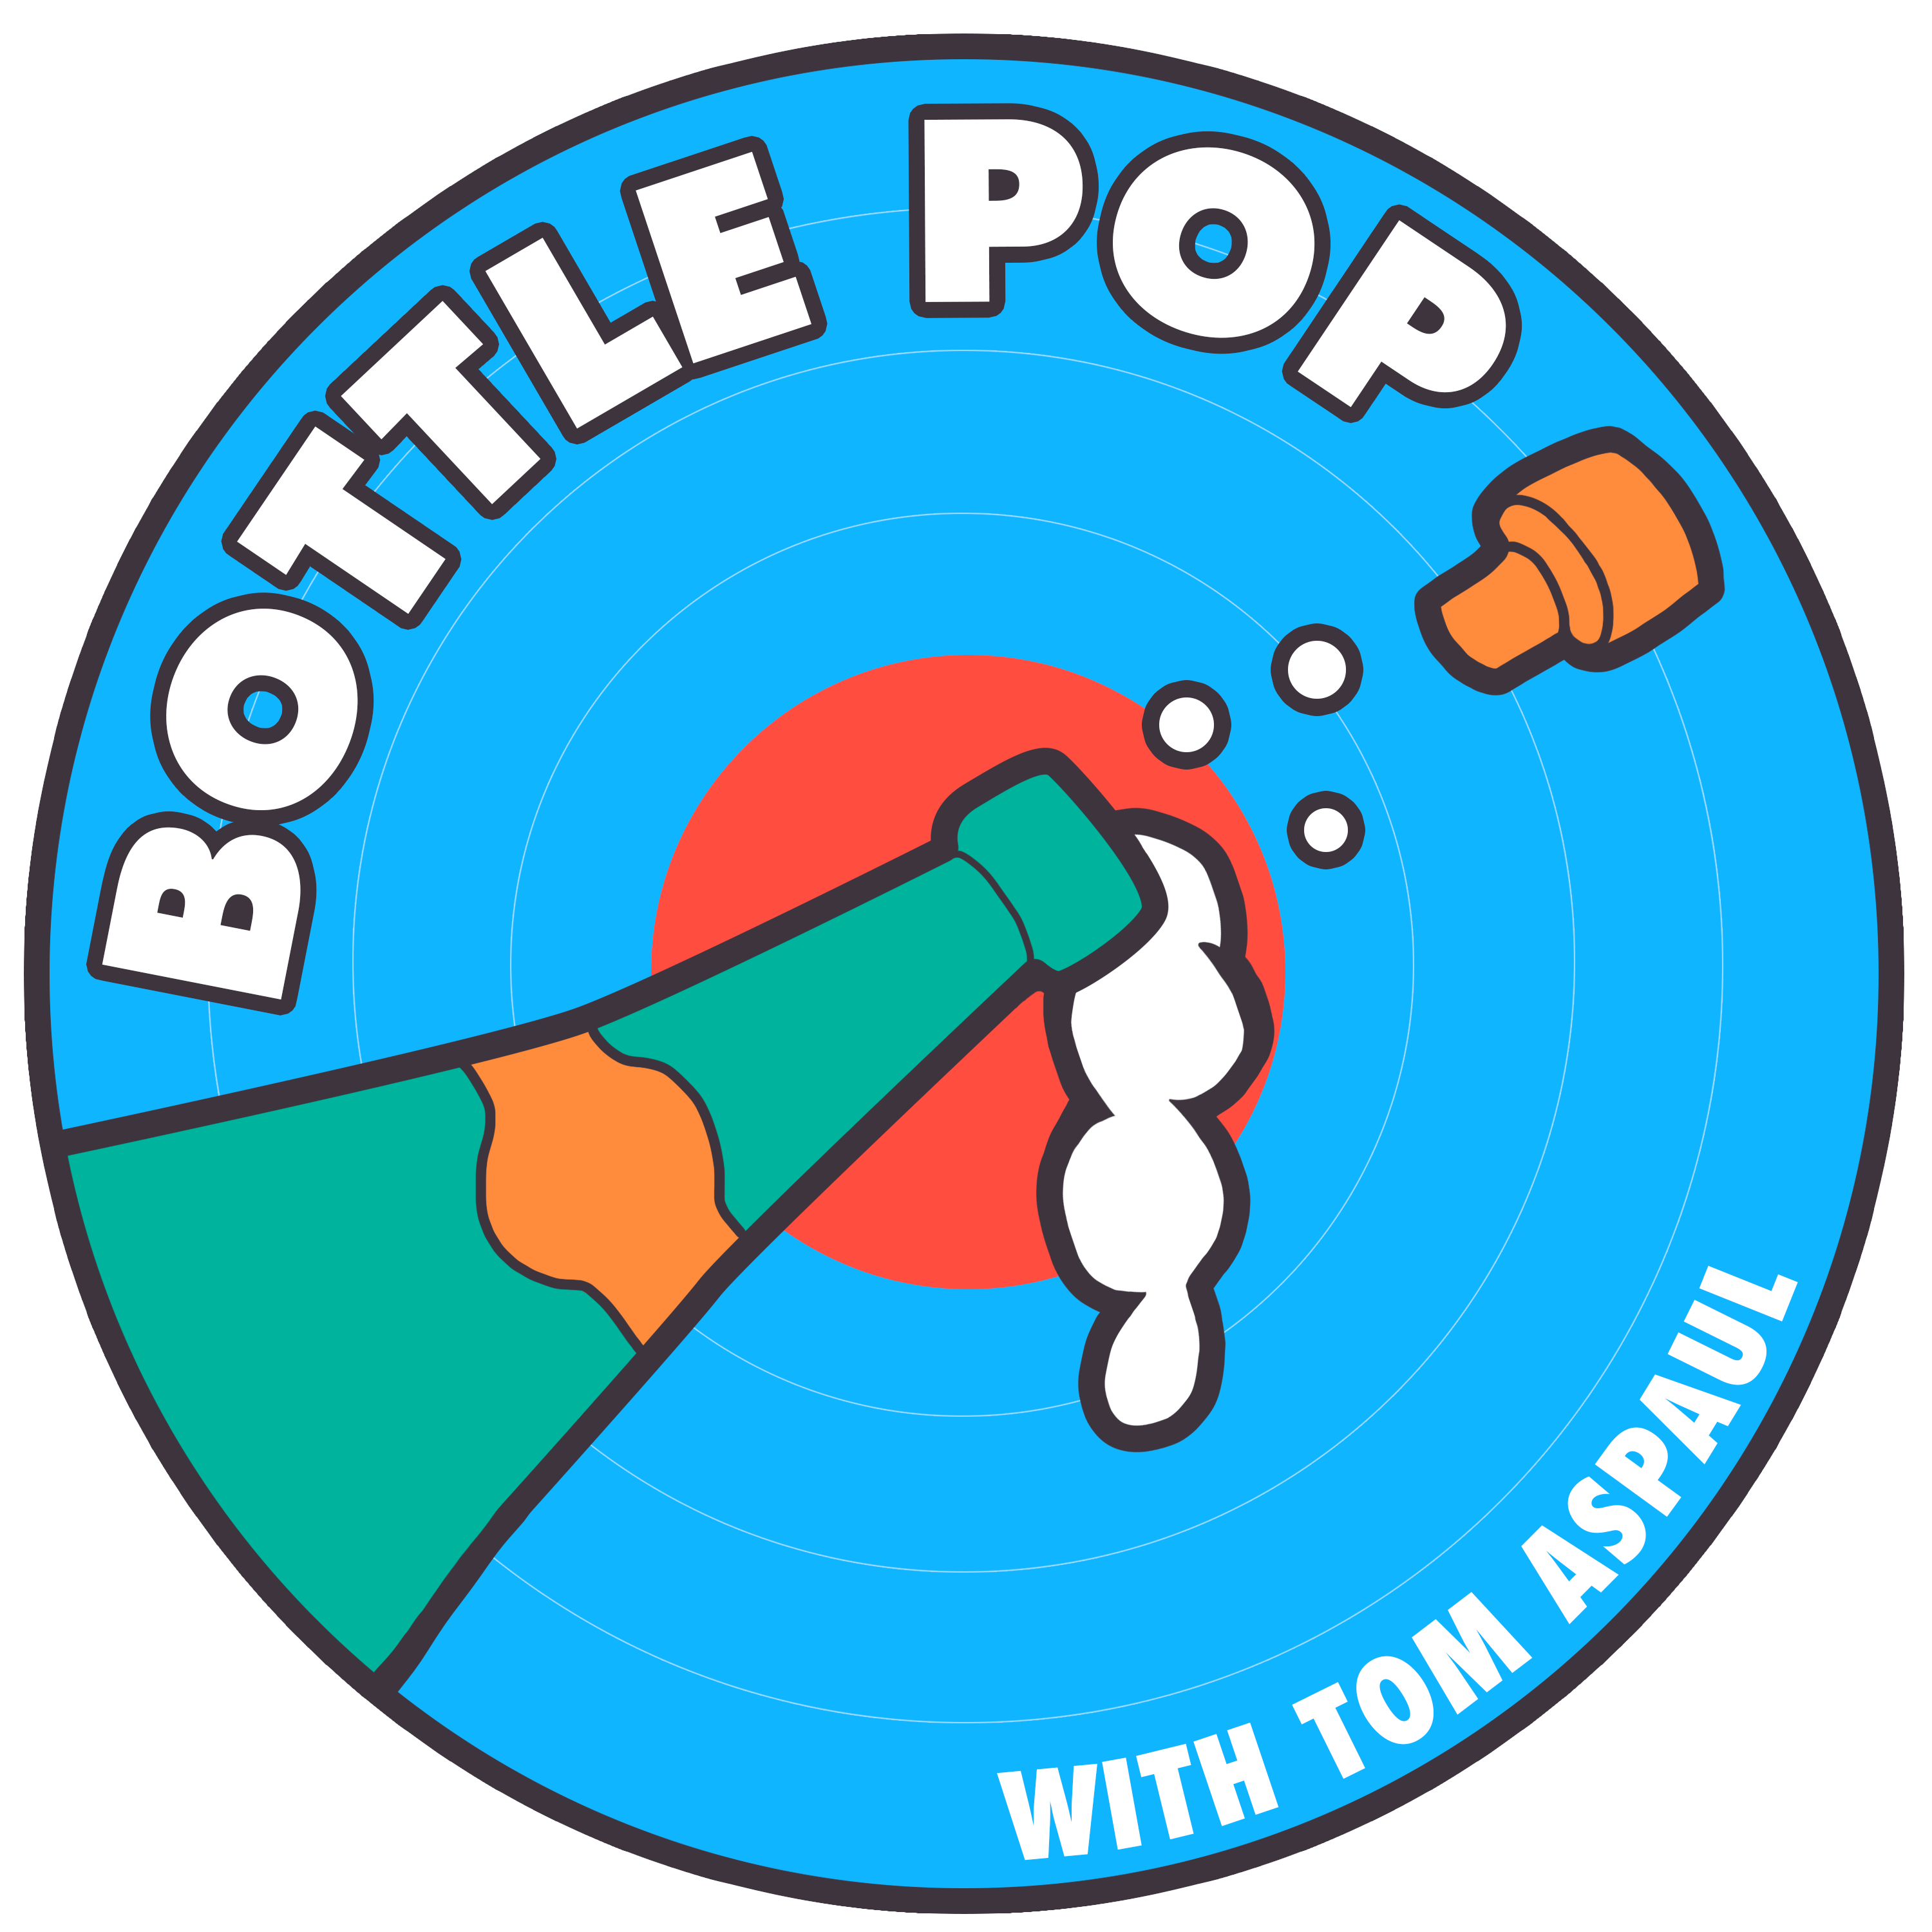 Bottle Pop with Tom Aspaul